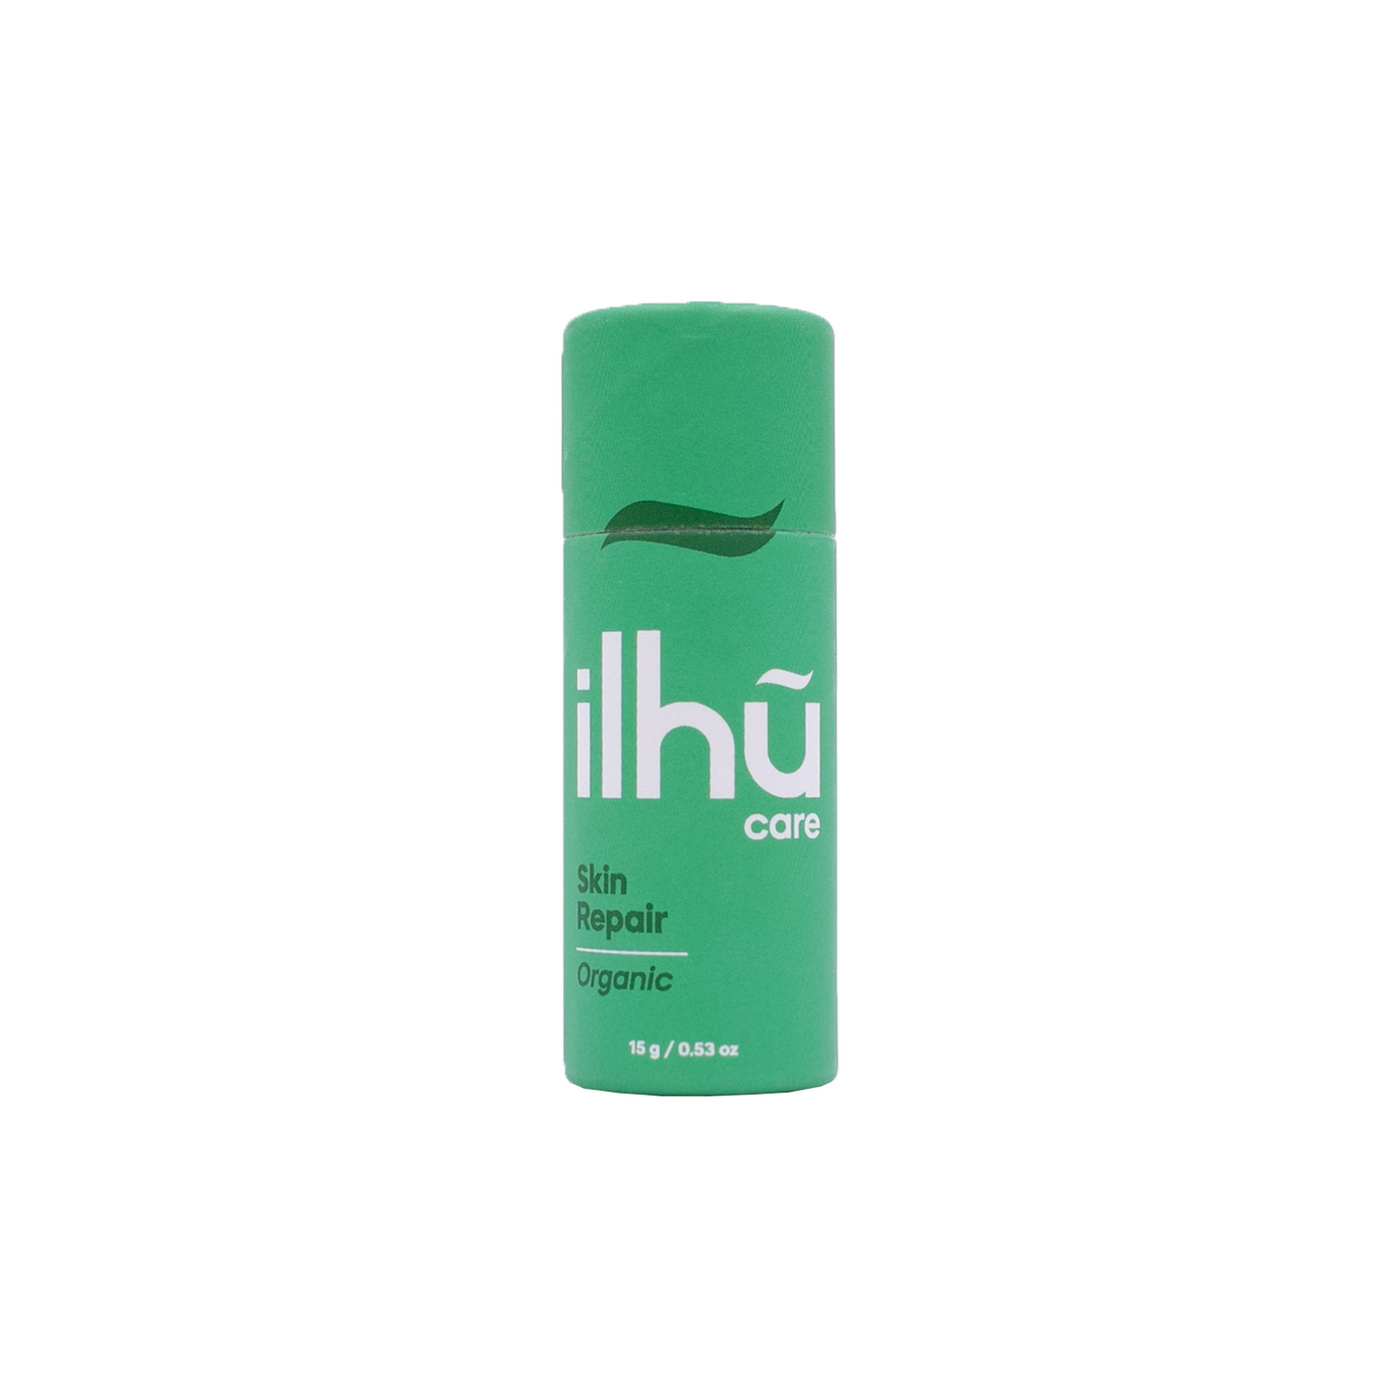 ilhu - Skin Repair 15g